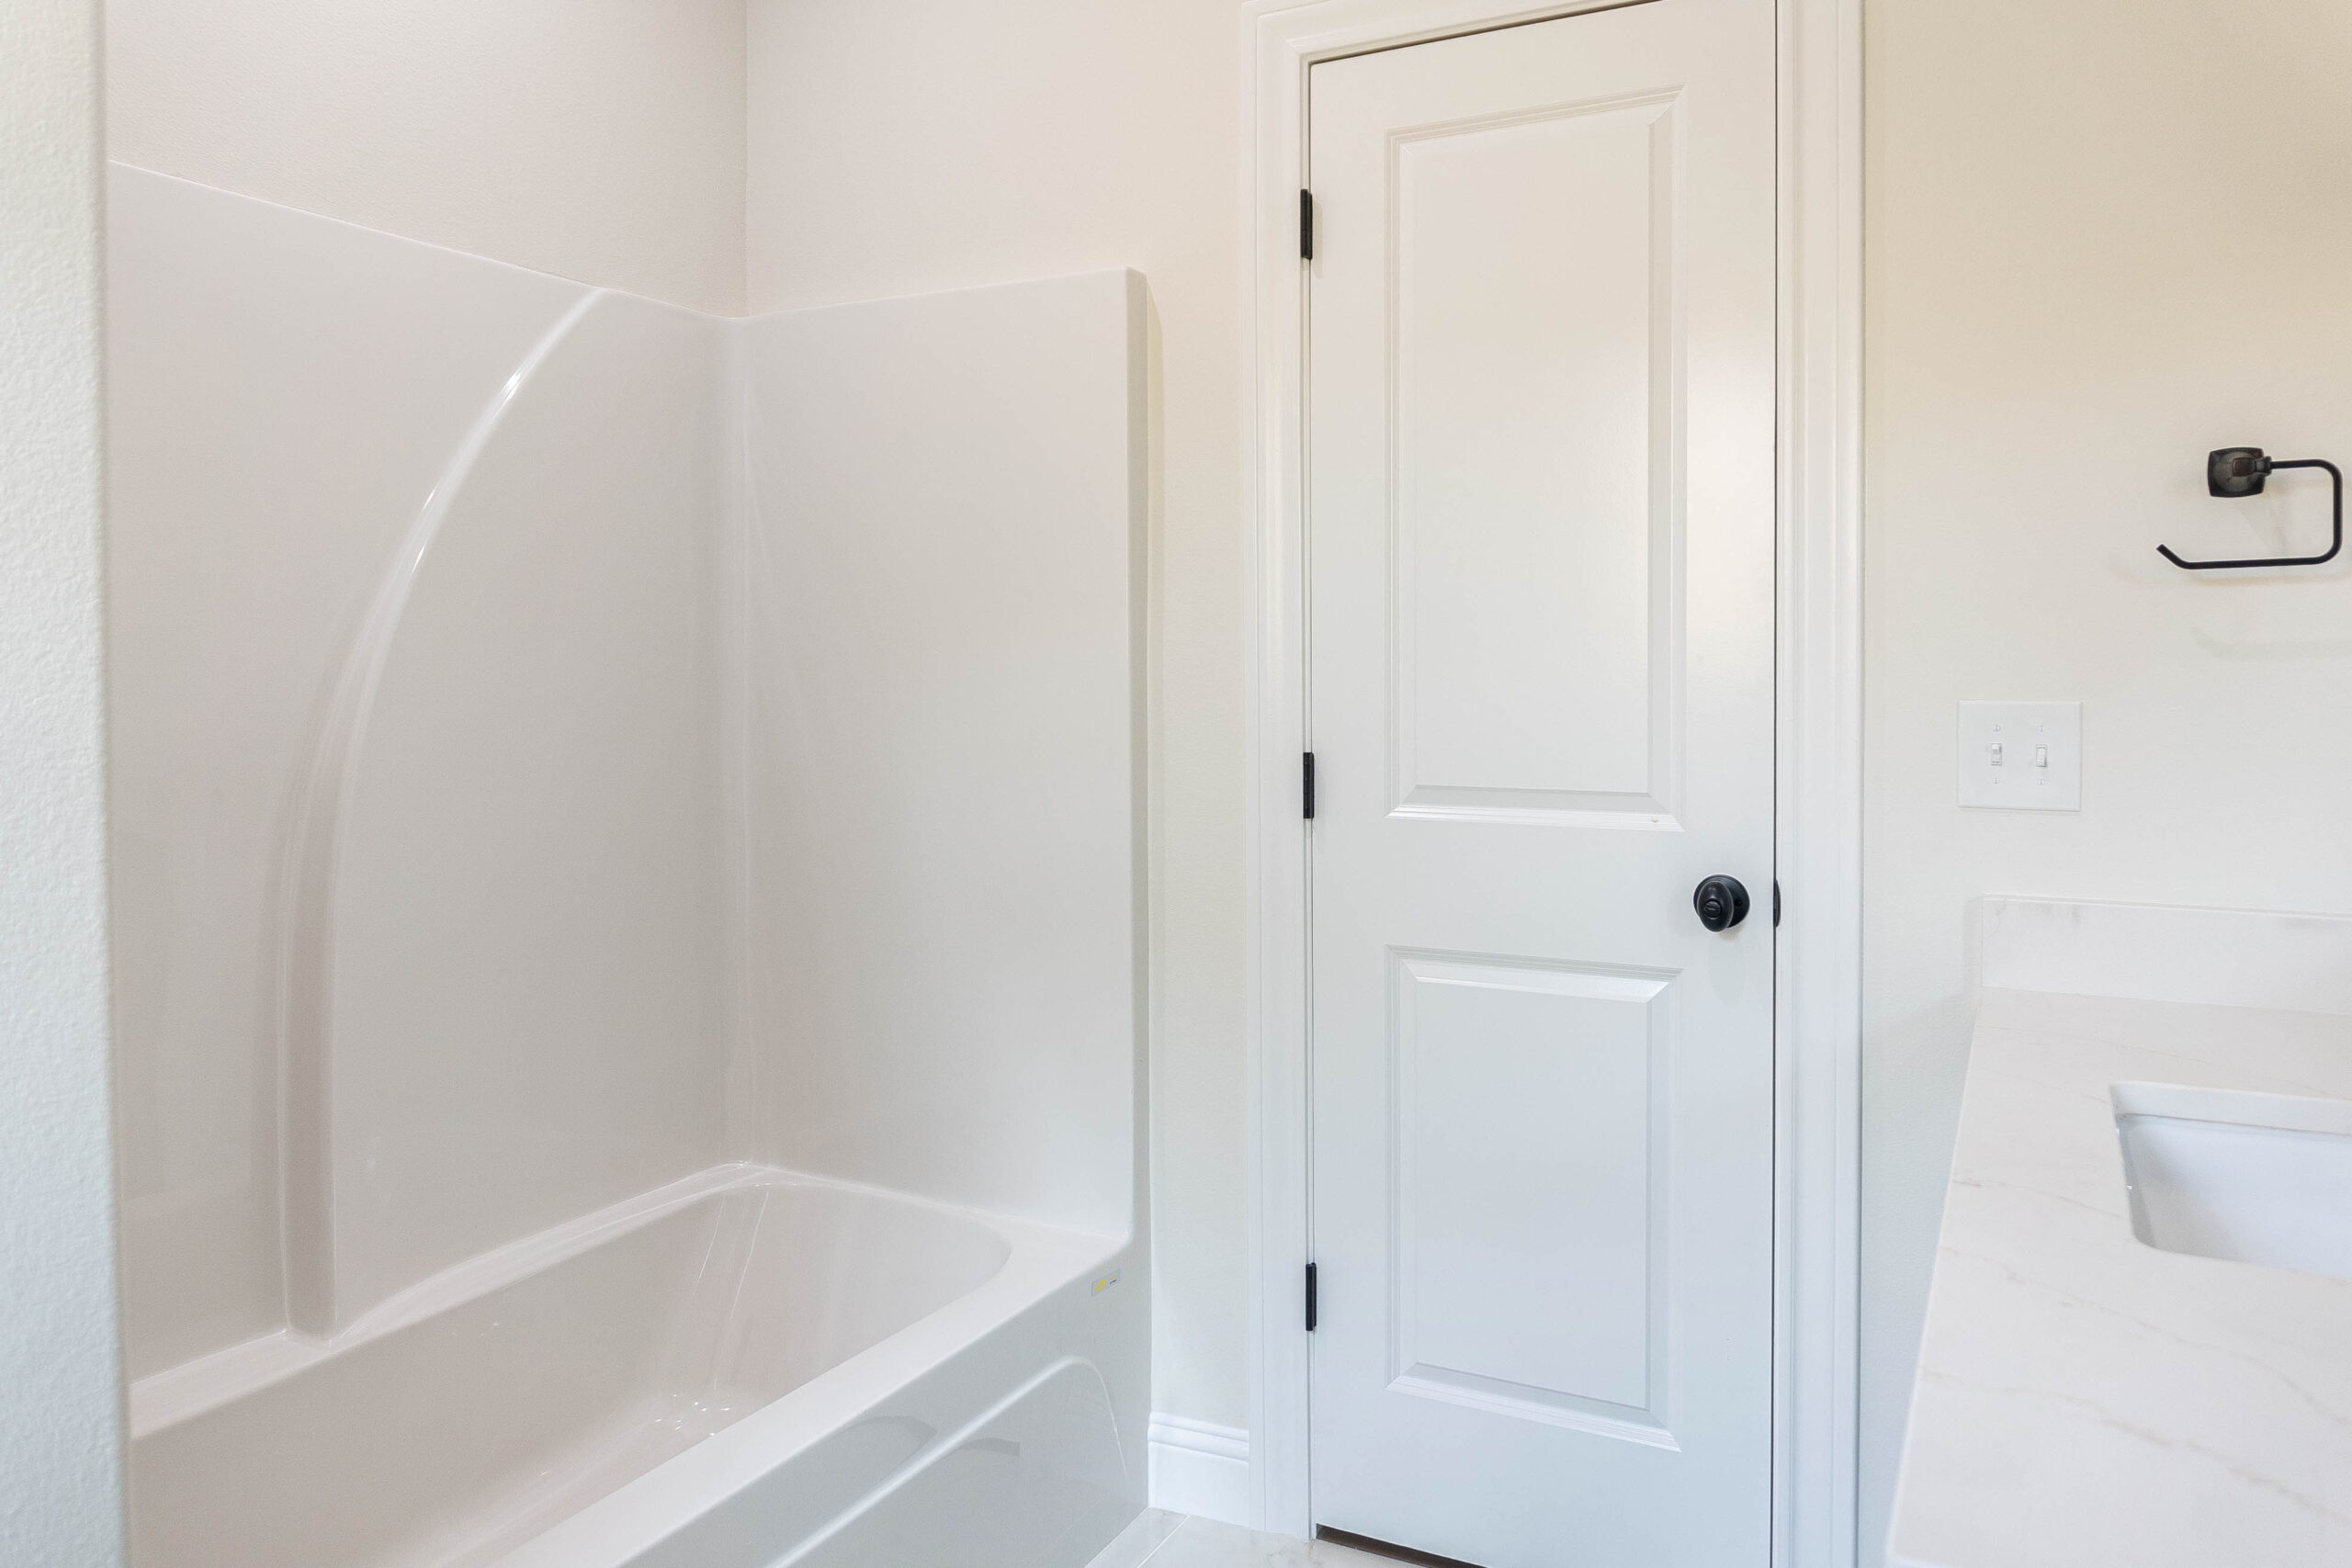 330 Hidden Grove bathroom built in prefab tub shower combo